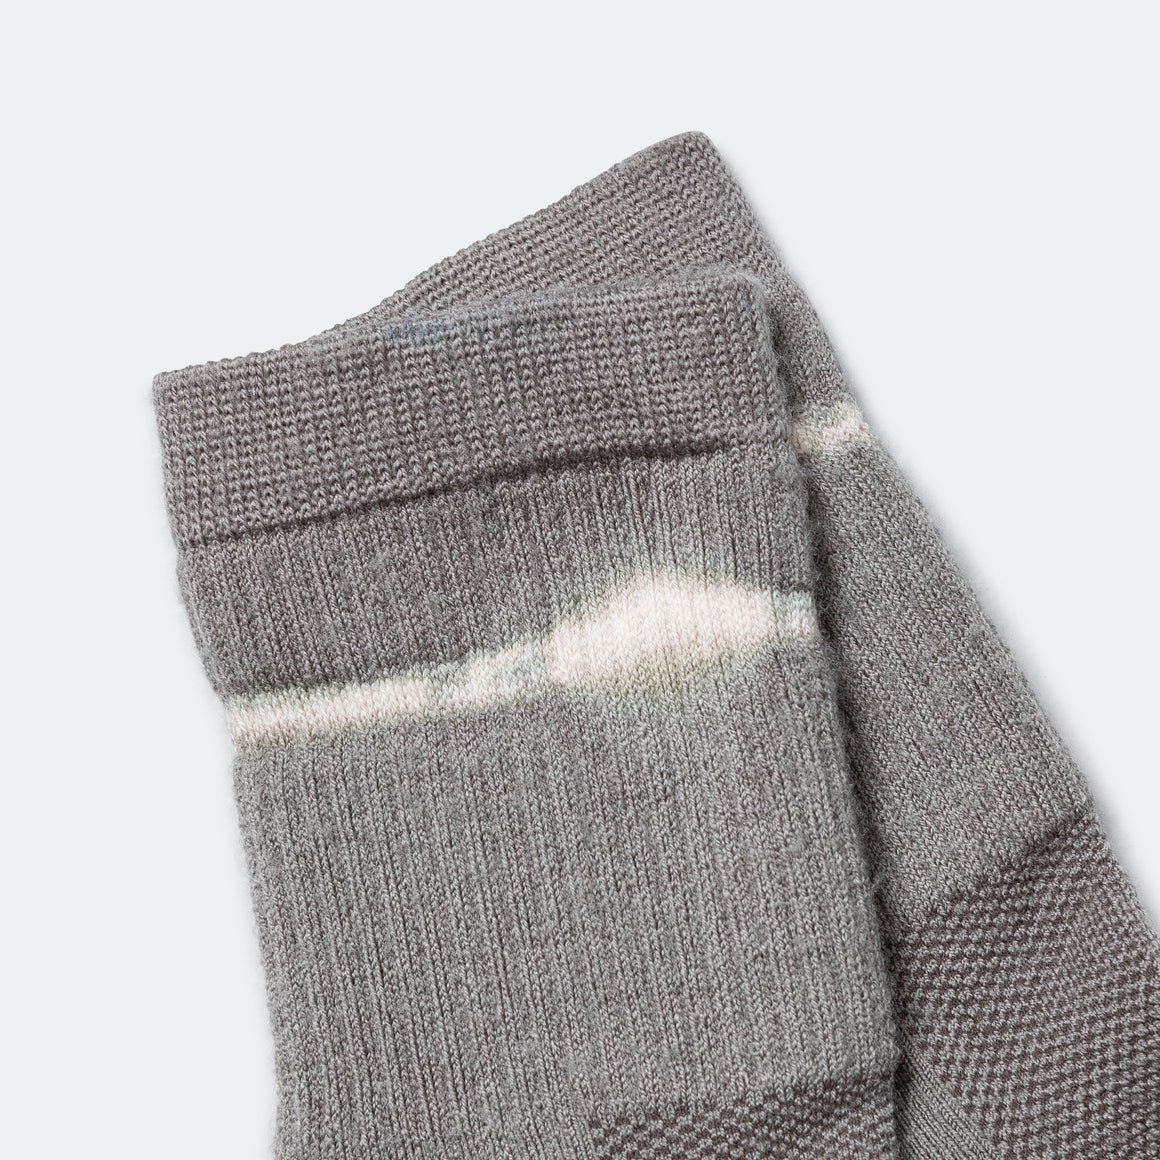 Satisfy - Merino Tube Socks - Morel Tie-Dye - Up There Athletics